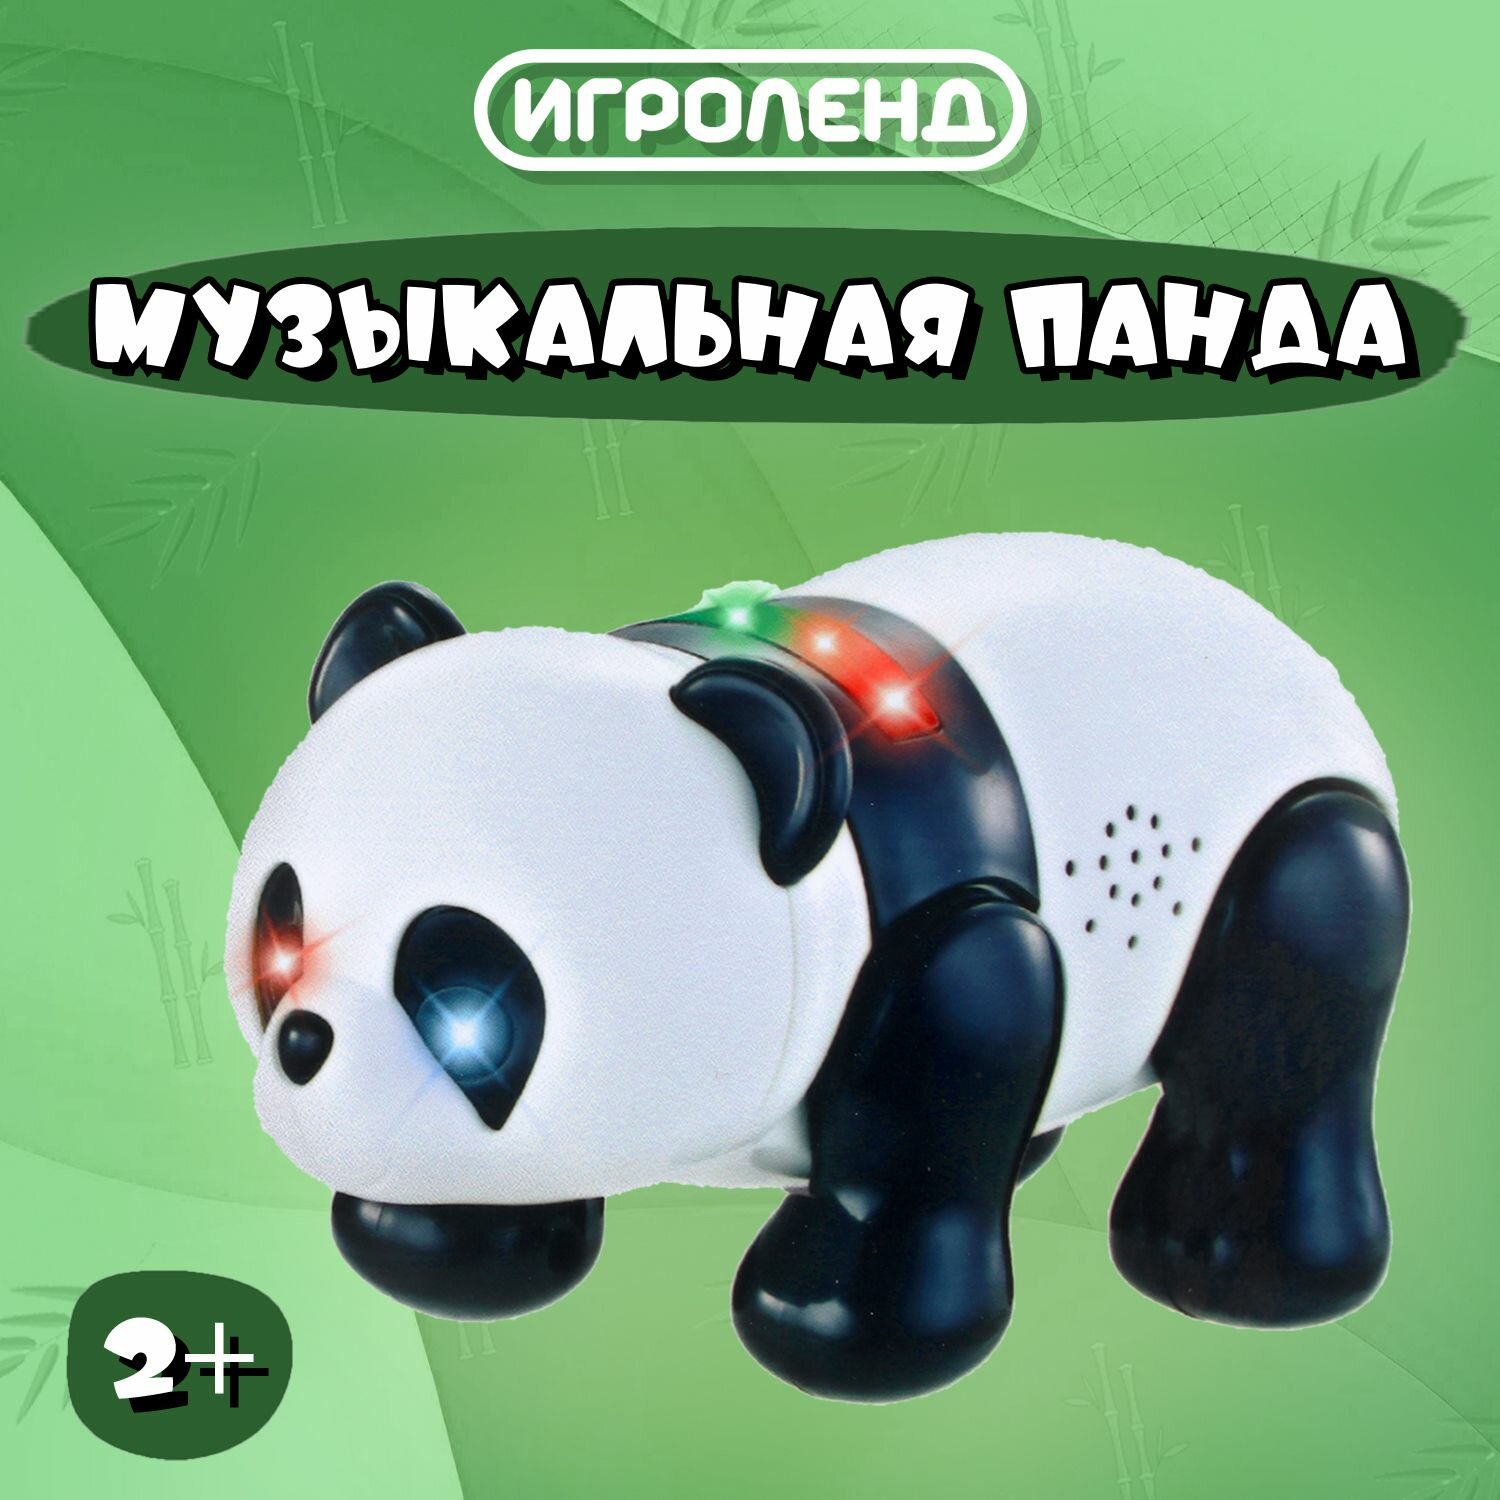 Игрушка музыкальная "Панда", игроленд, 3хАА, свет, звук, пластик, 17х10х9 см